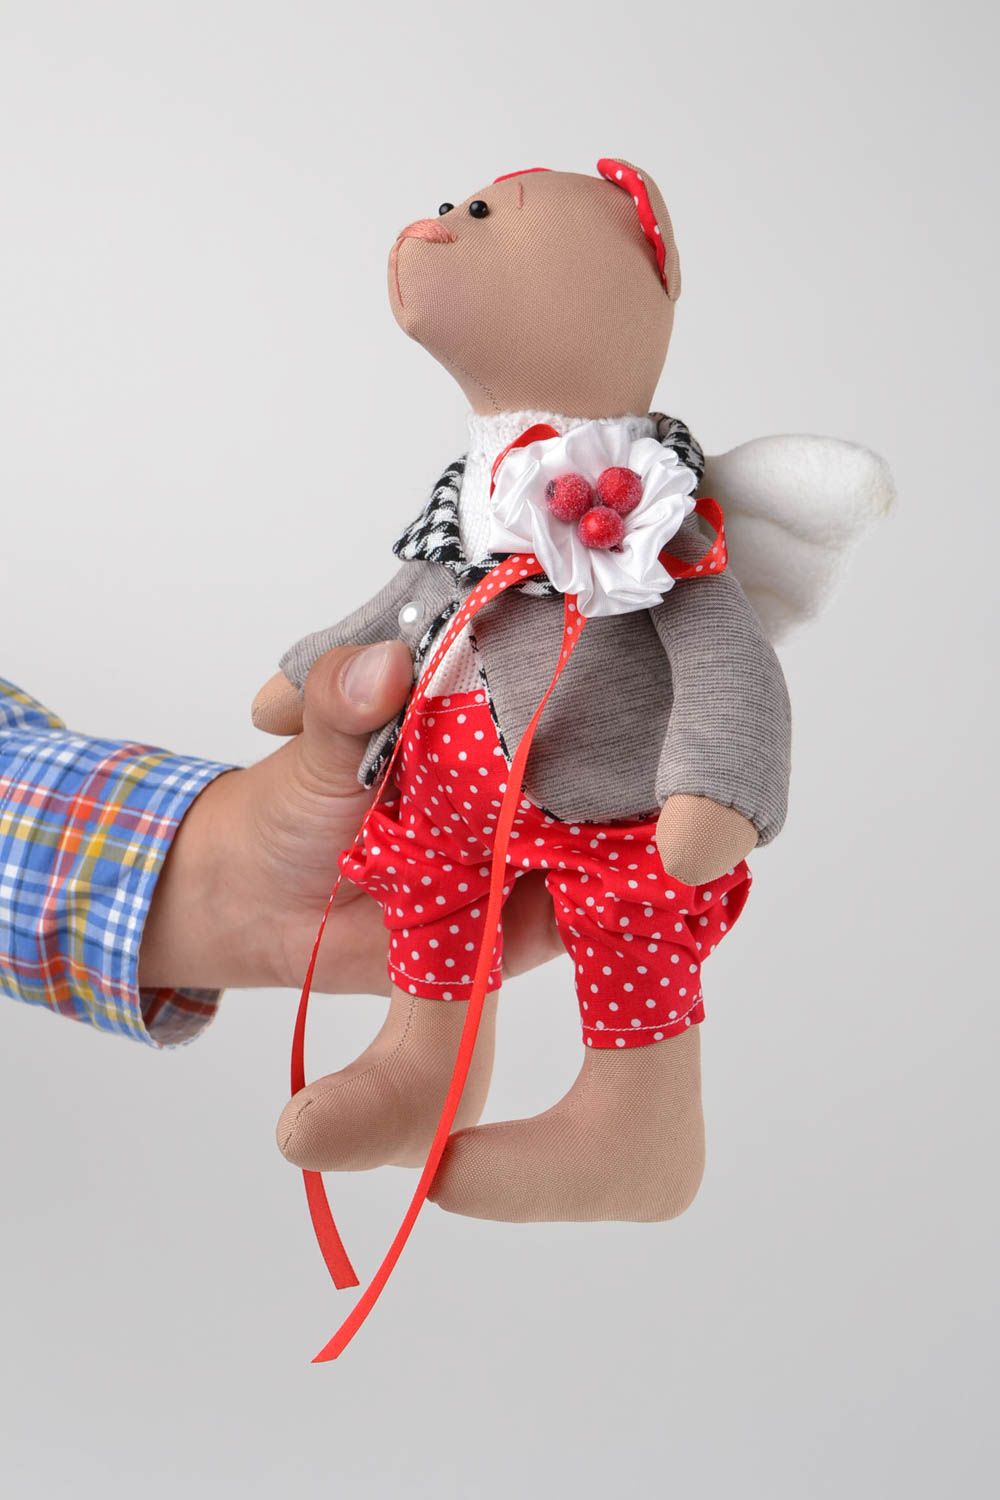 Handmade baby toy interior stuffed toy nursery decor ideas present for baby photo 2